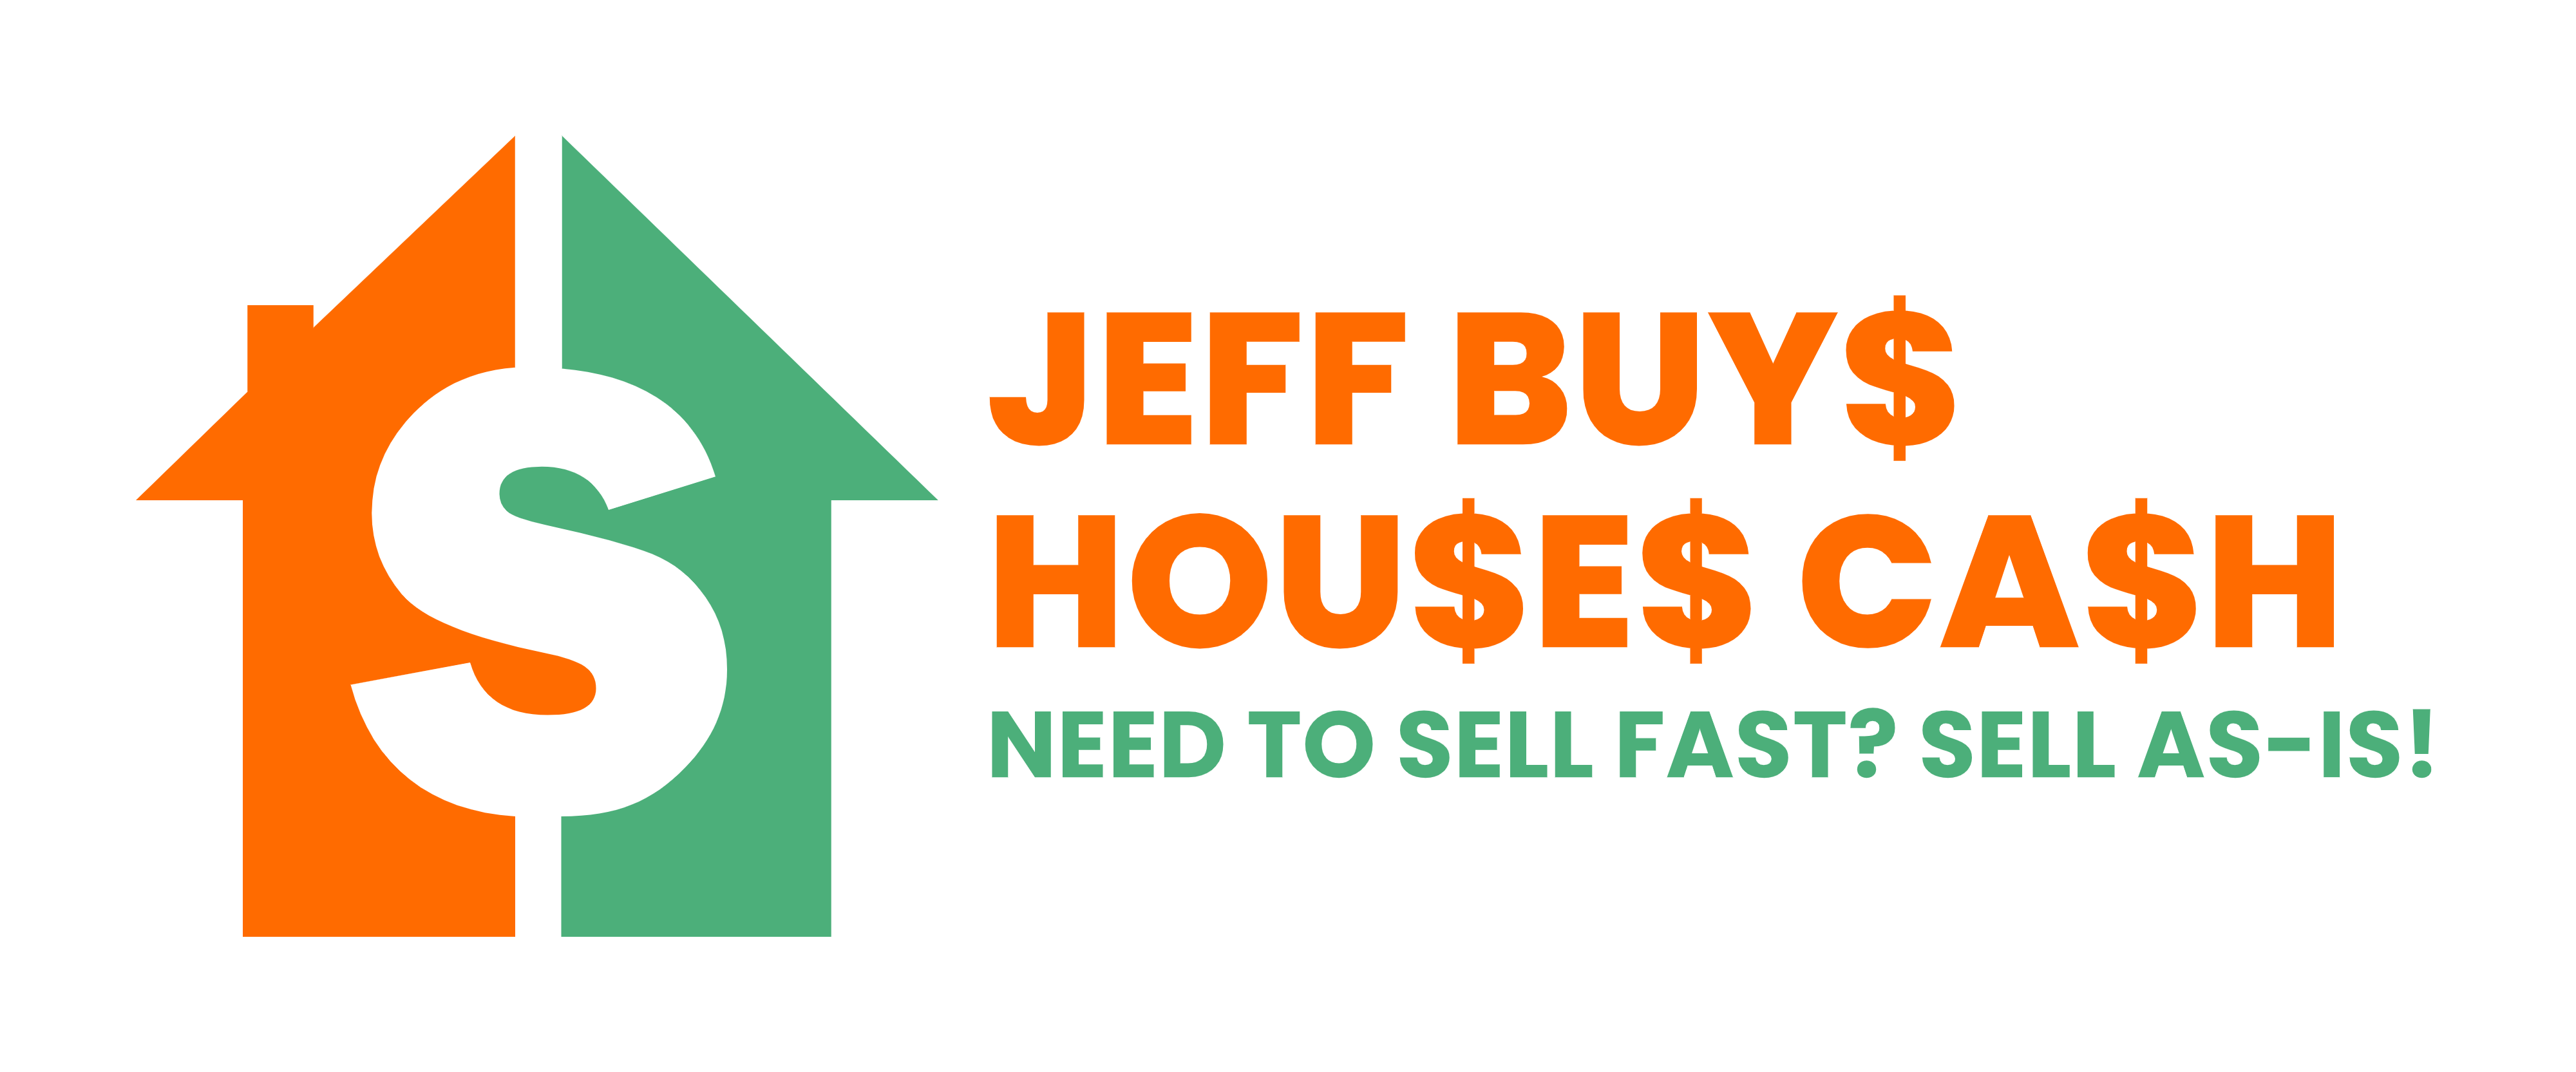 Jeff Buys Houses Cash logo